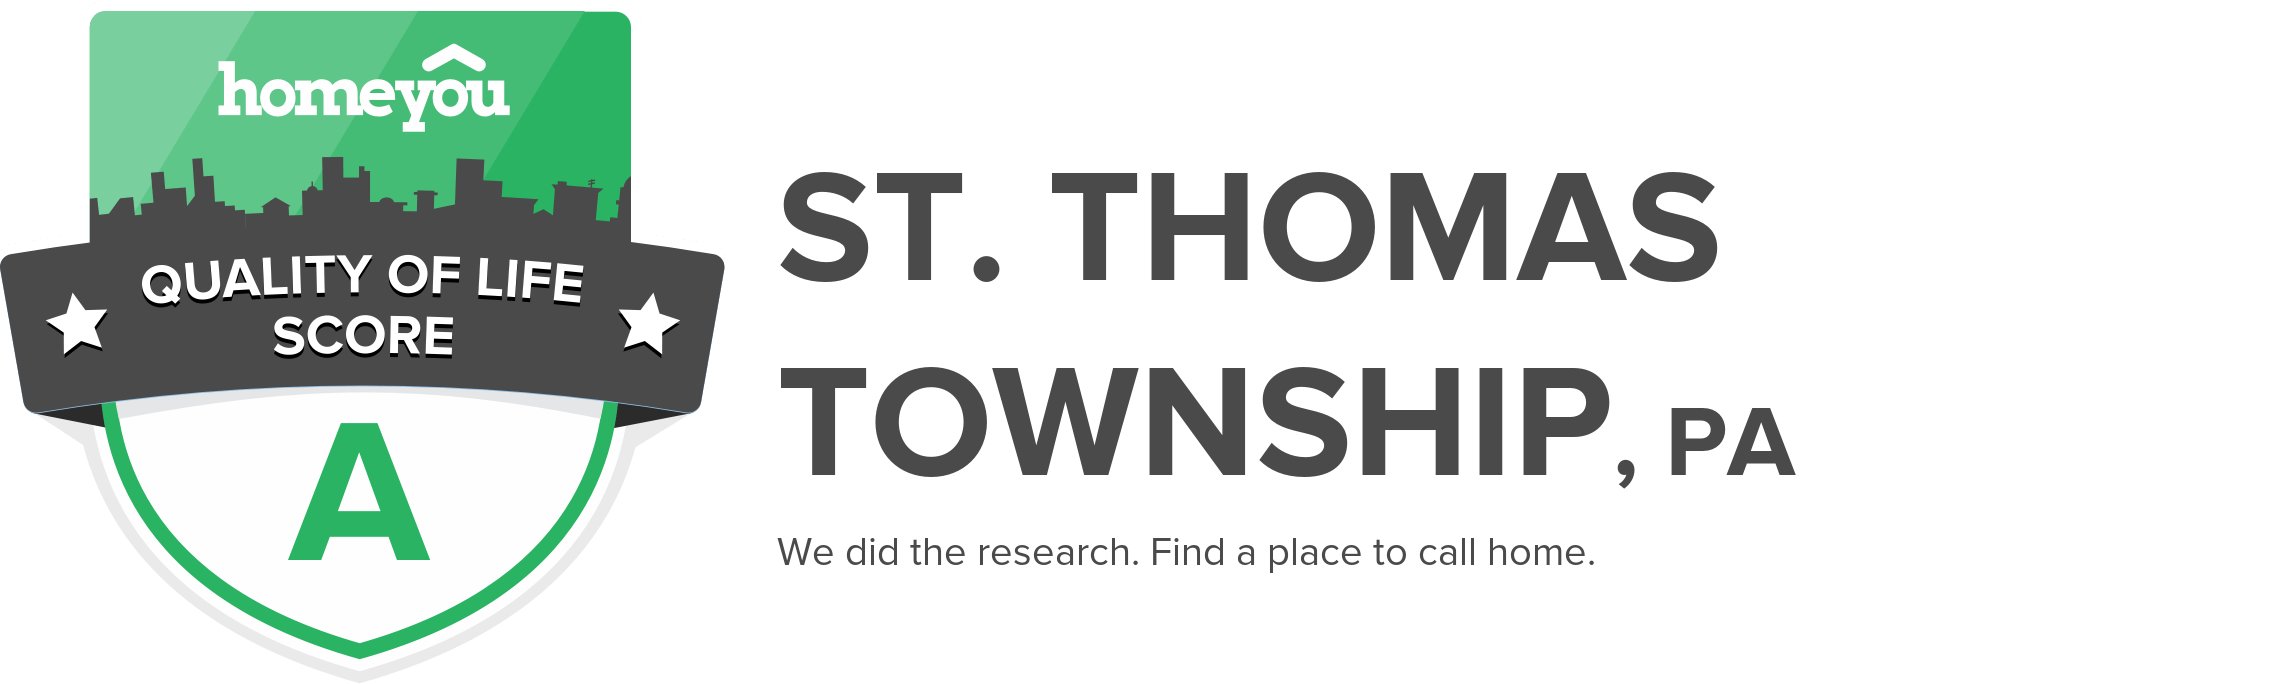 St. Thomas township, PA